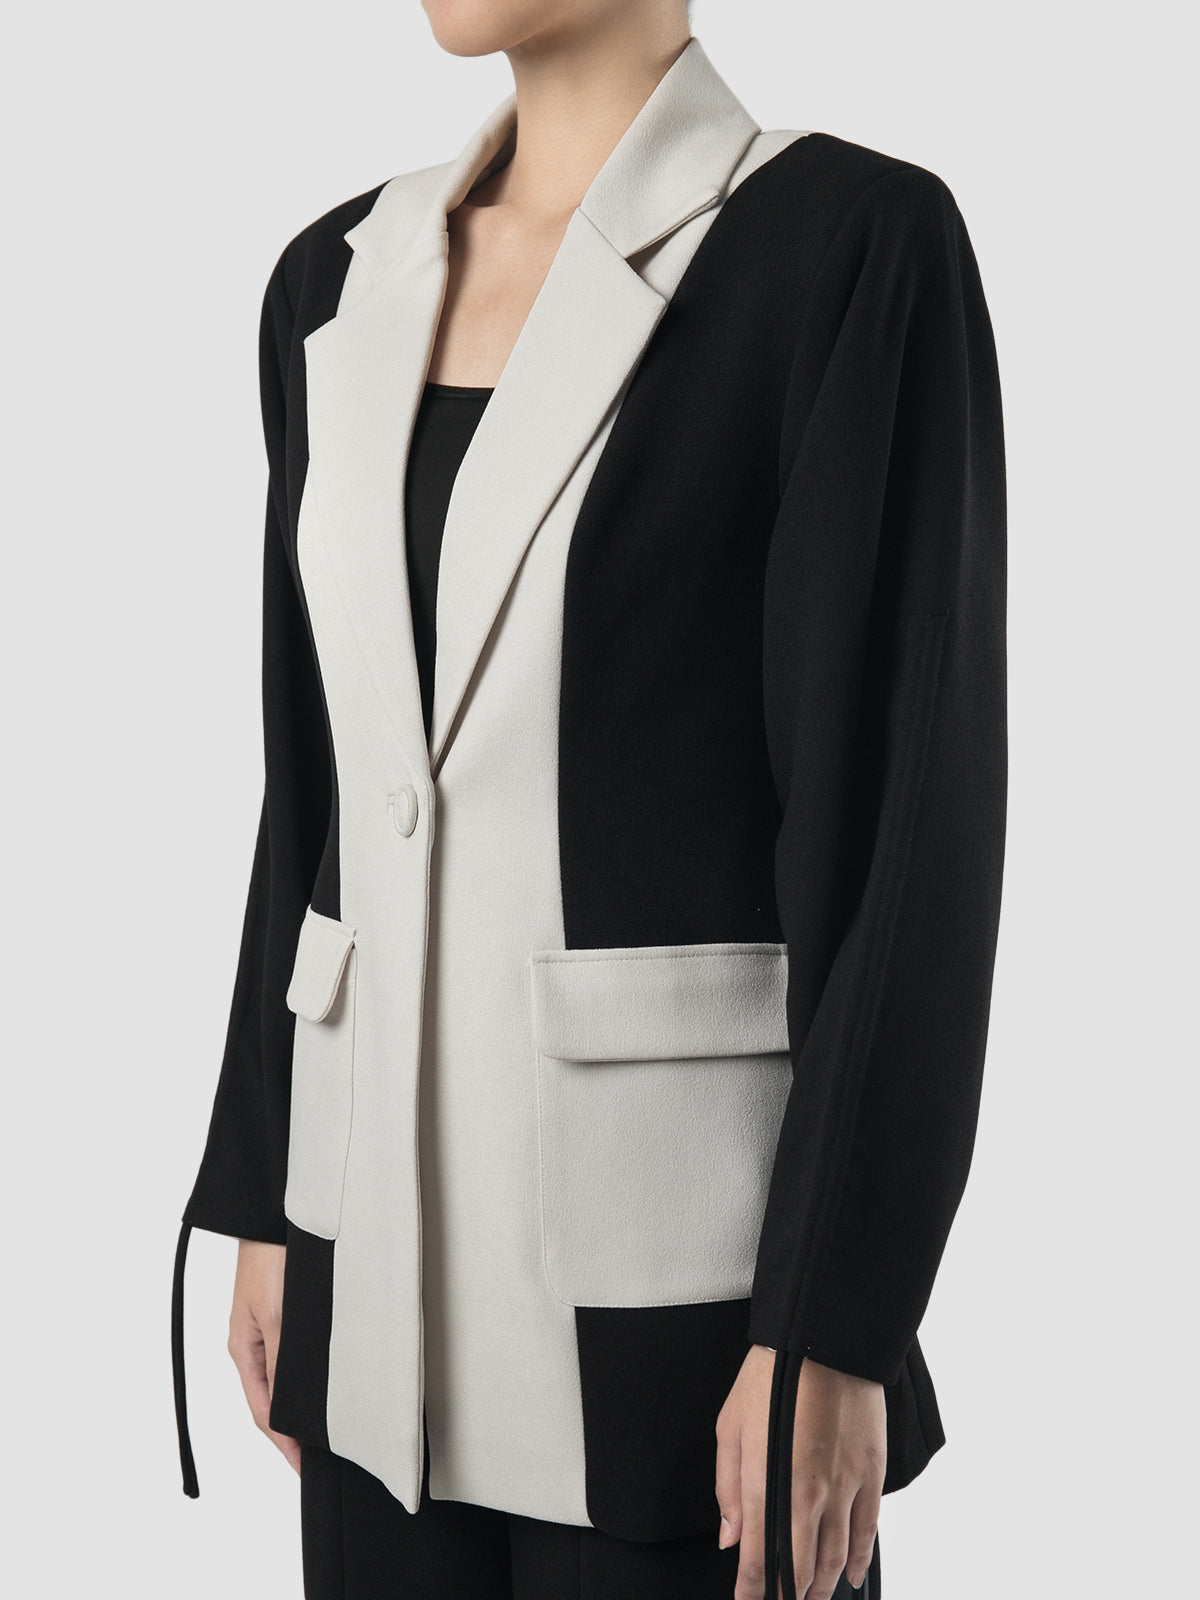 Cosmos two-toned black and white blazer jacket